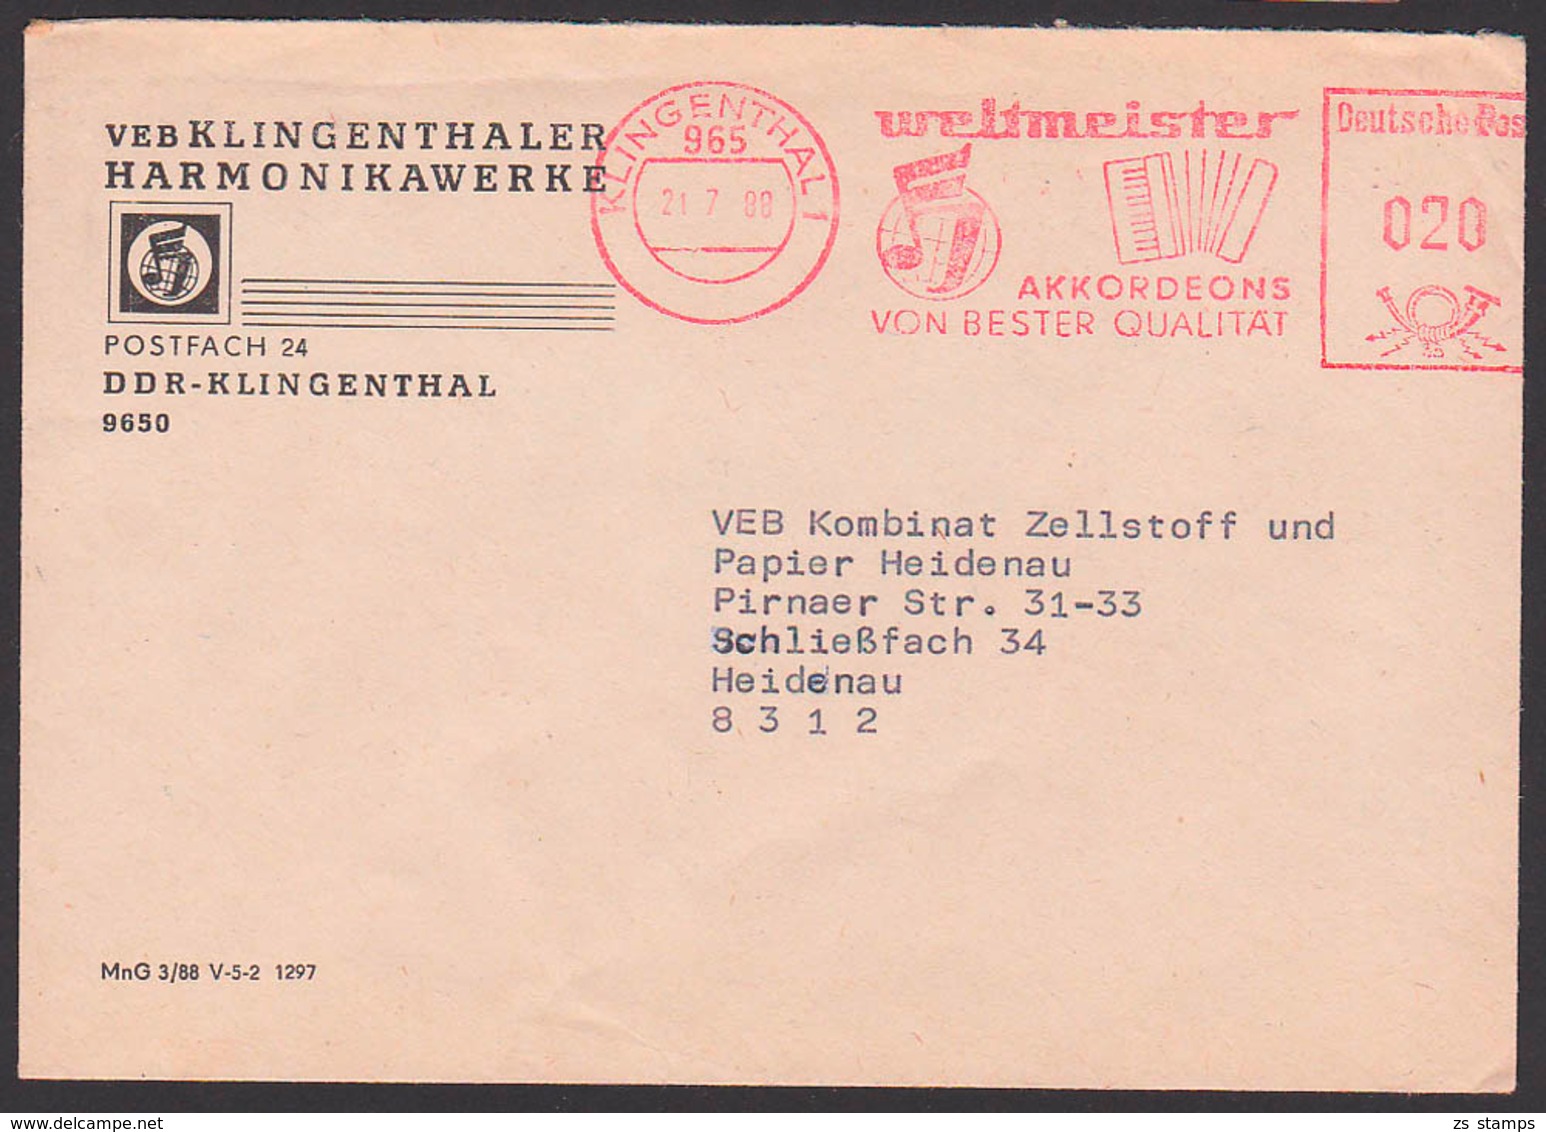 Klingenthal AFS Klingenthaler Harmonikawere, AbbWeltmeister Akkordeon 21.7.88, Musik - Maschinenstempel (EMA)